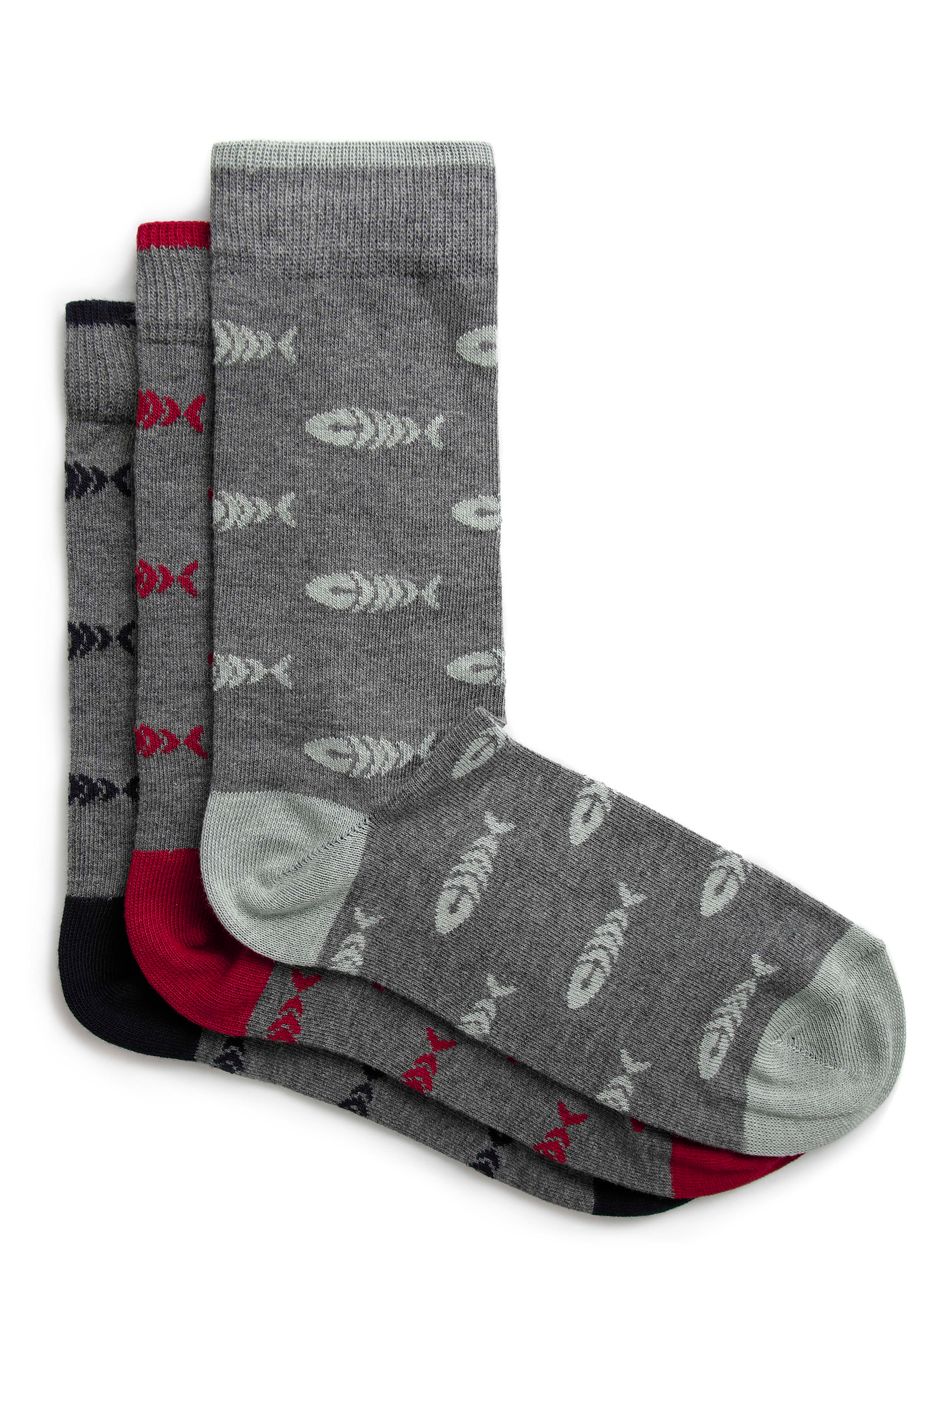 Ronan Eco Bones Socks 3 Pack Grey